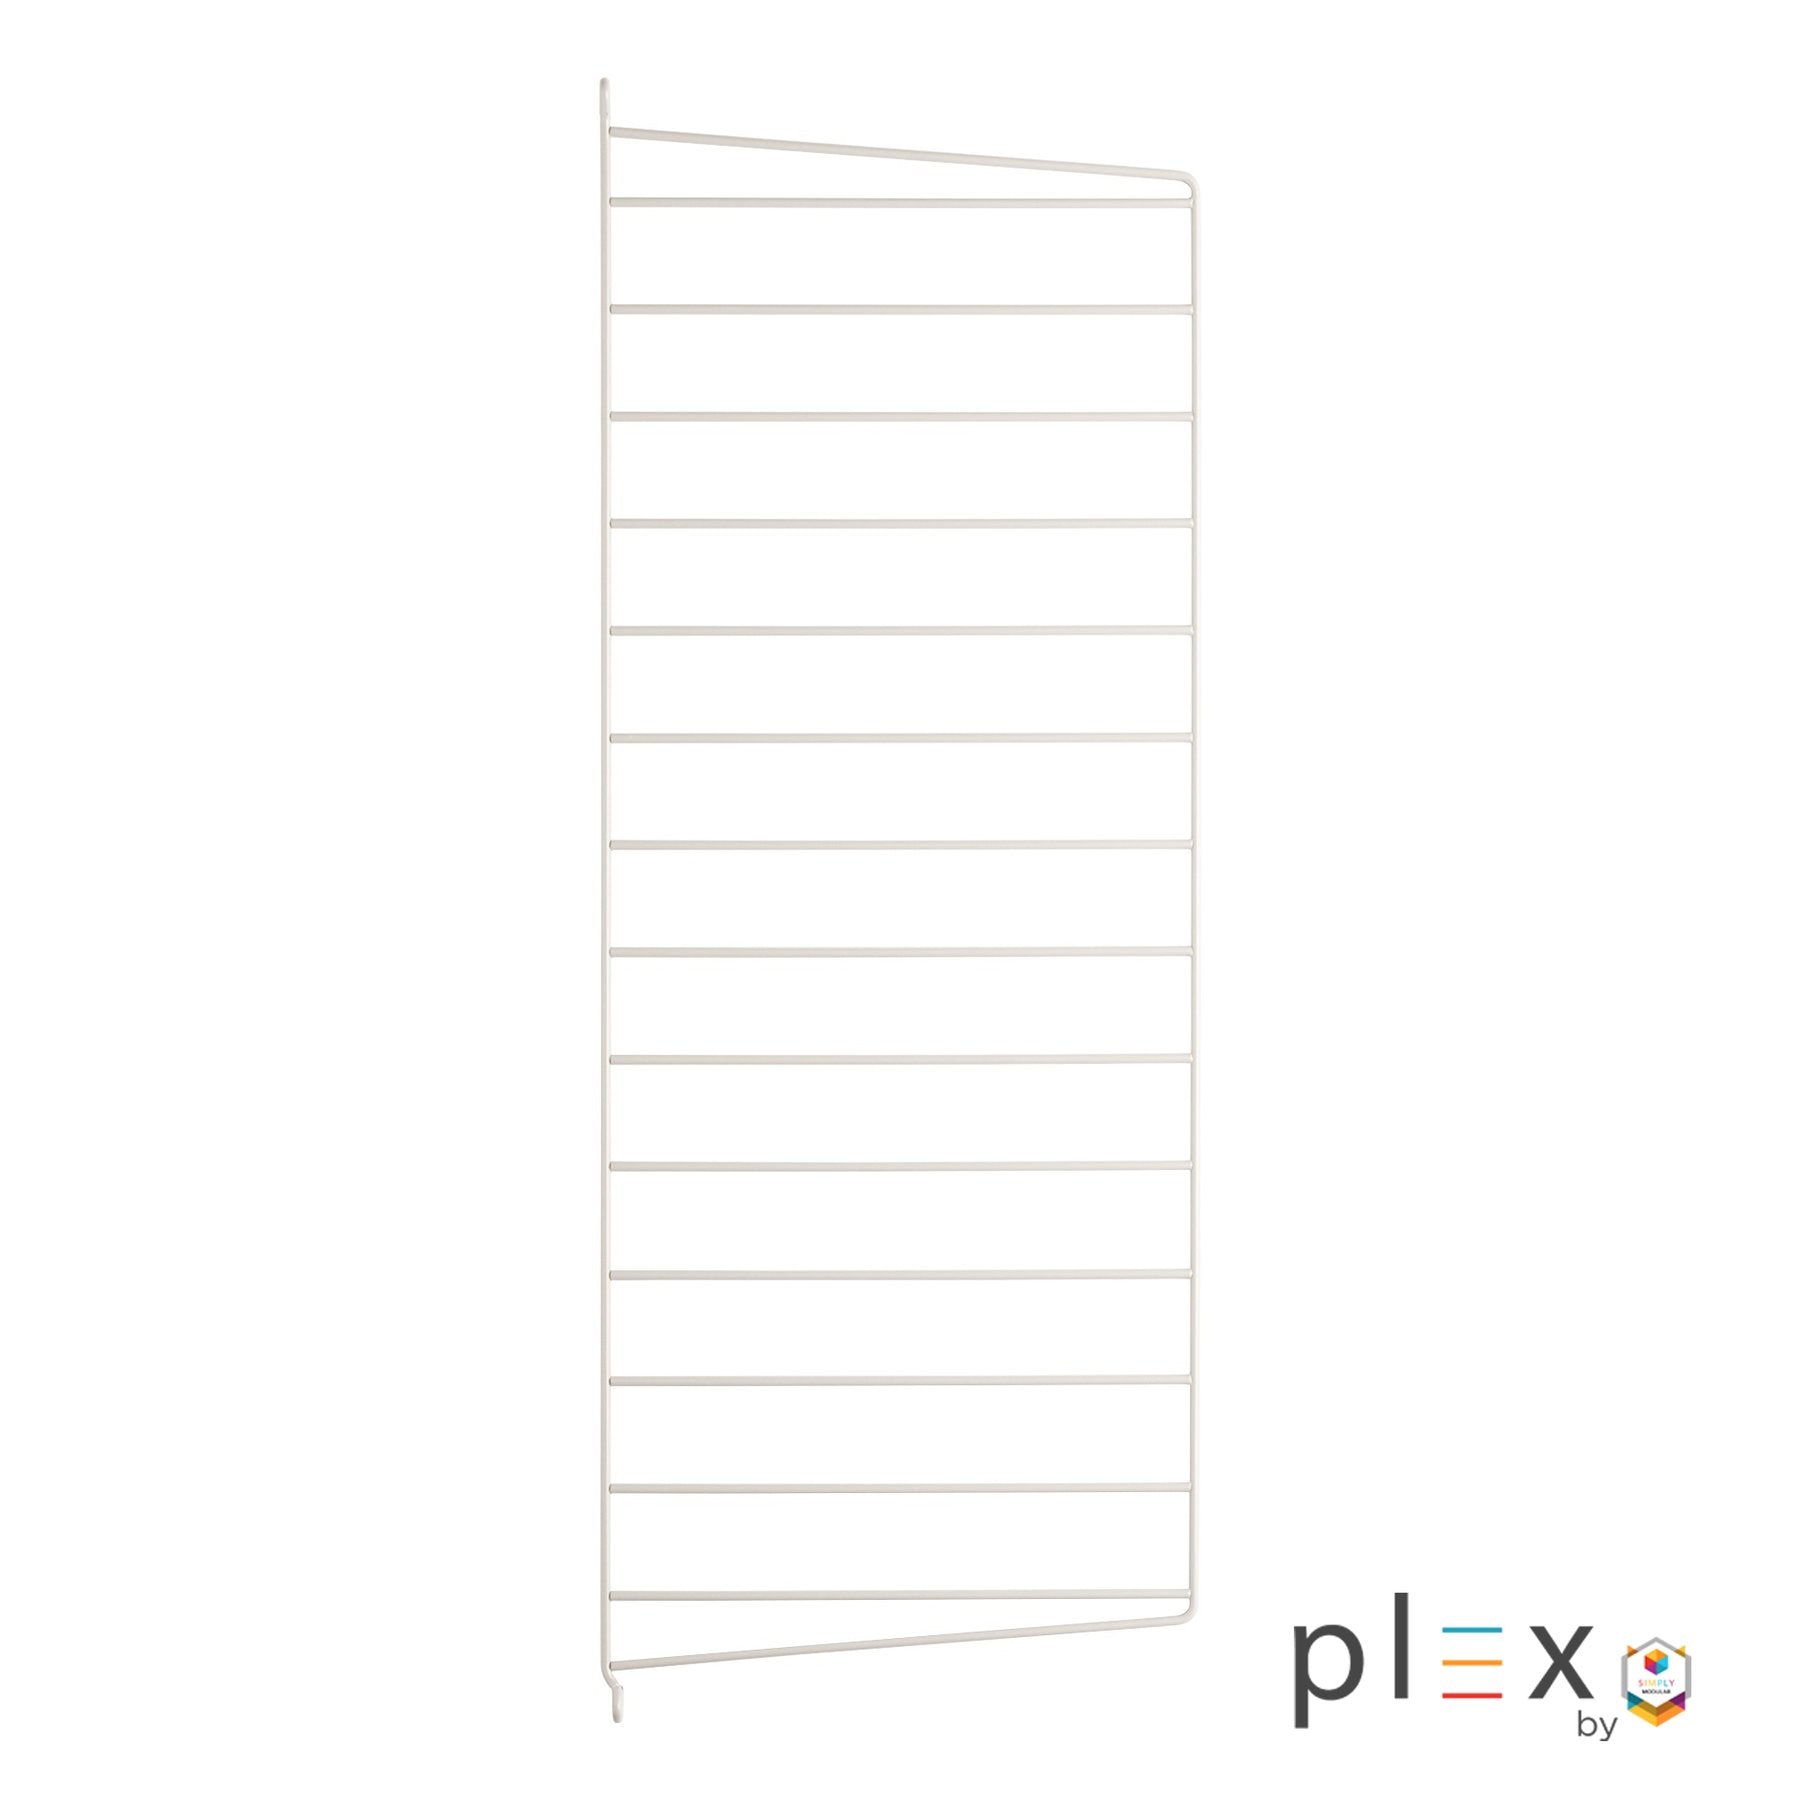 Simply Modular - Plex Extra Panel for Plex 3-Level Shelving System (6544506191906)